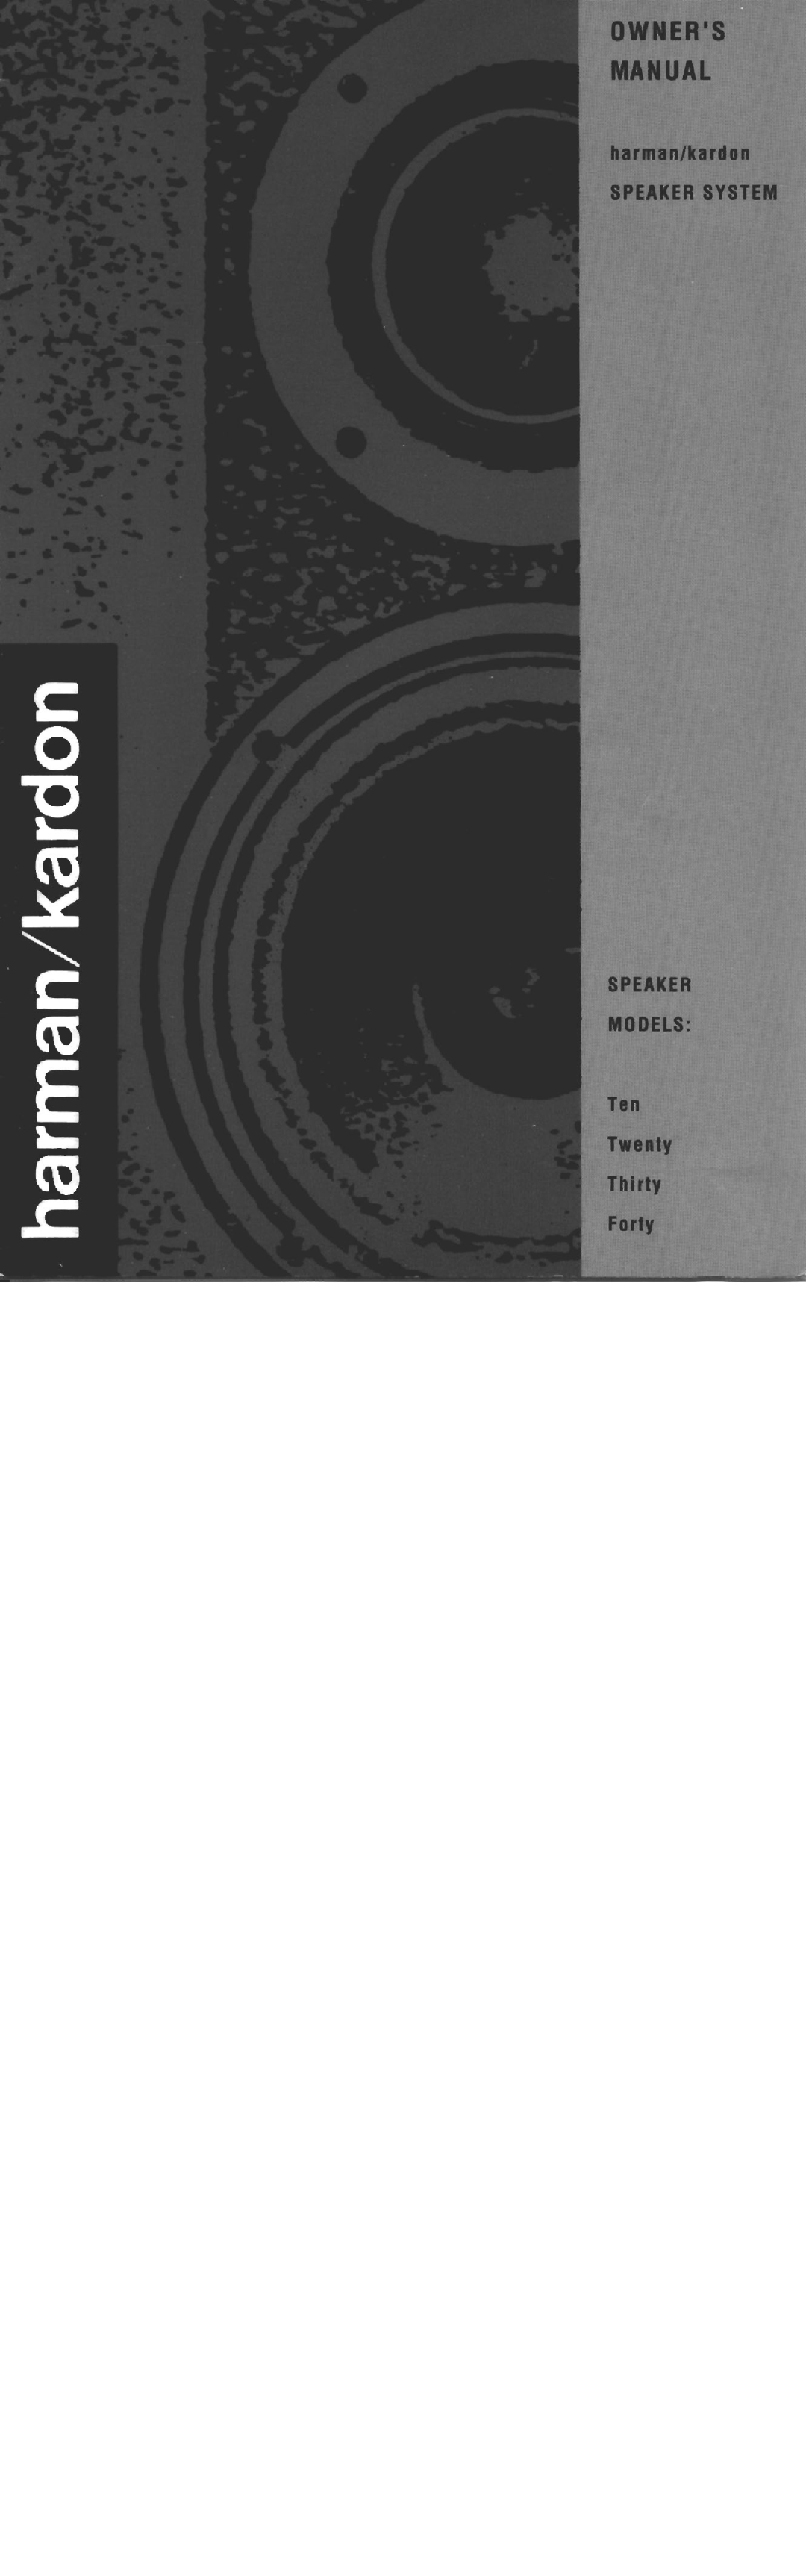 Harman-Kardon TEN, TWENTY, THIRTY, FORTY manual 